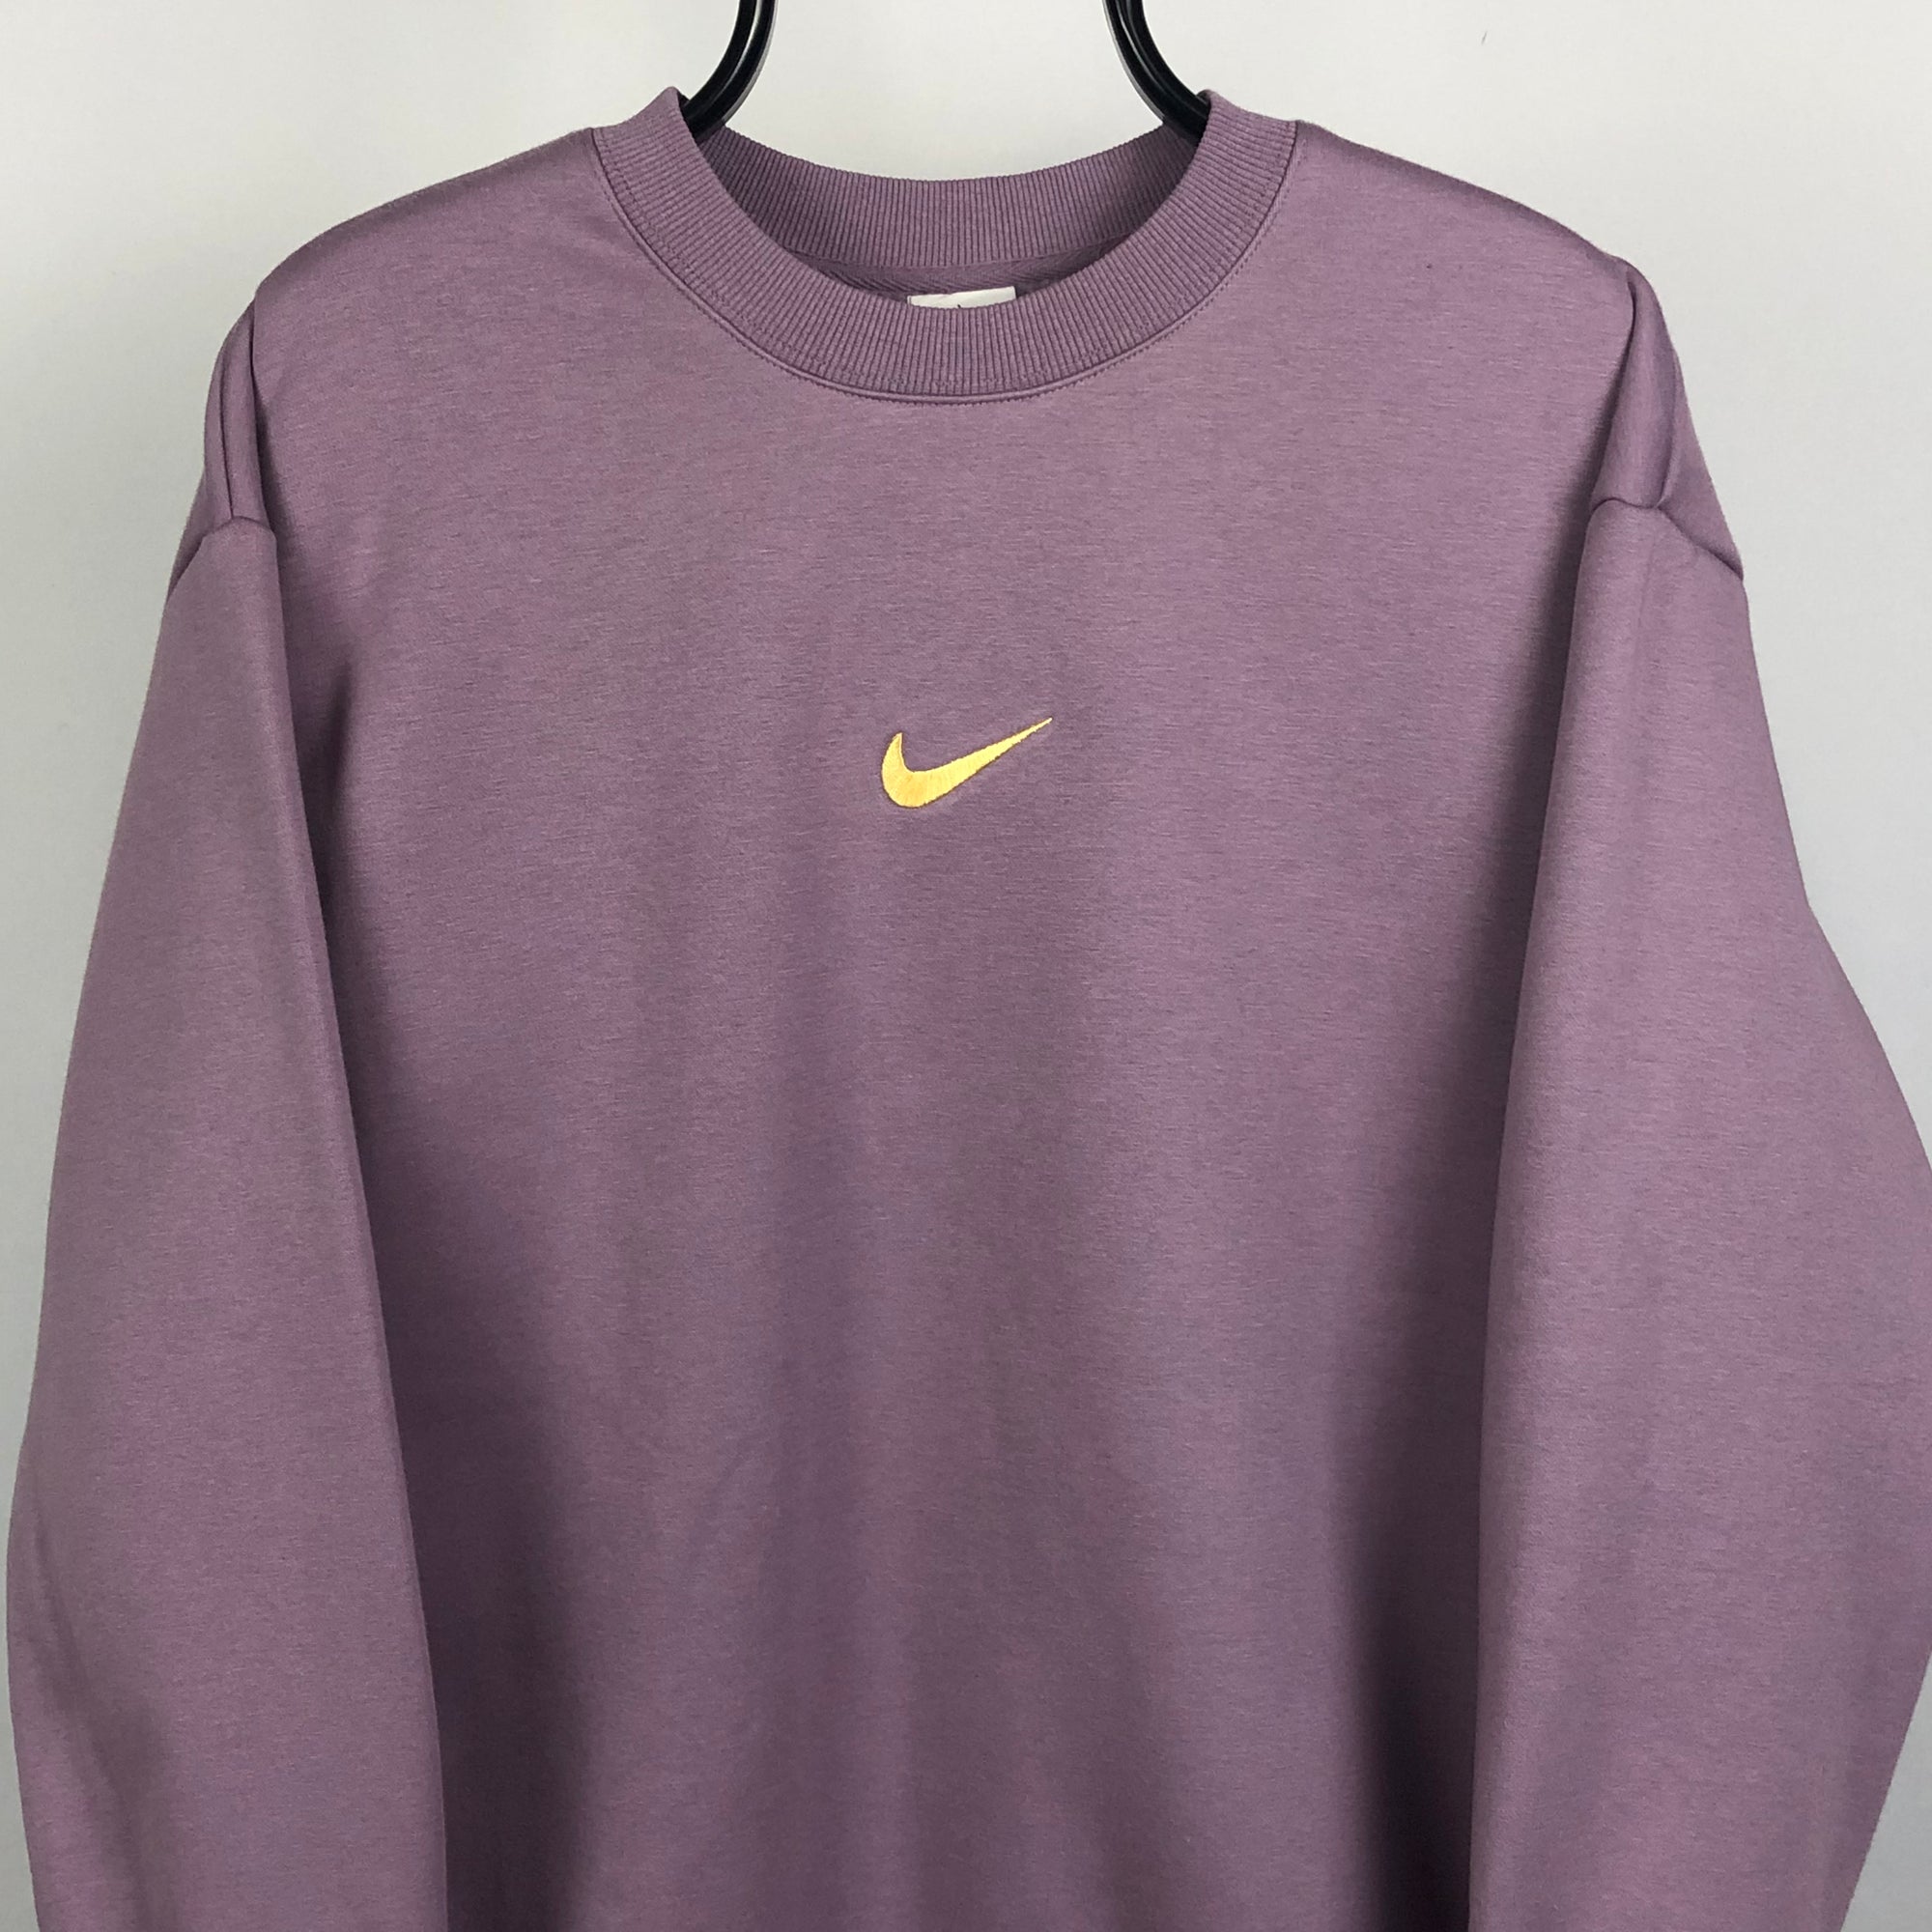 Nike Embroidered Swoosh Sweatshirt in Purple - Men's Medium/Women's Large